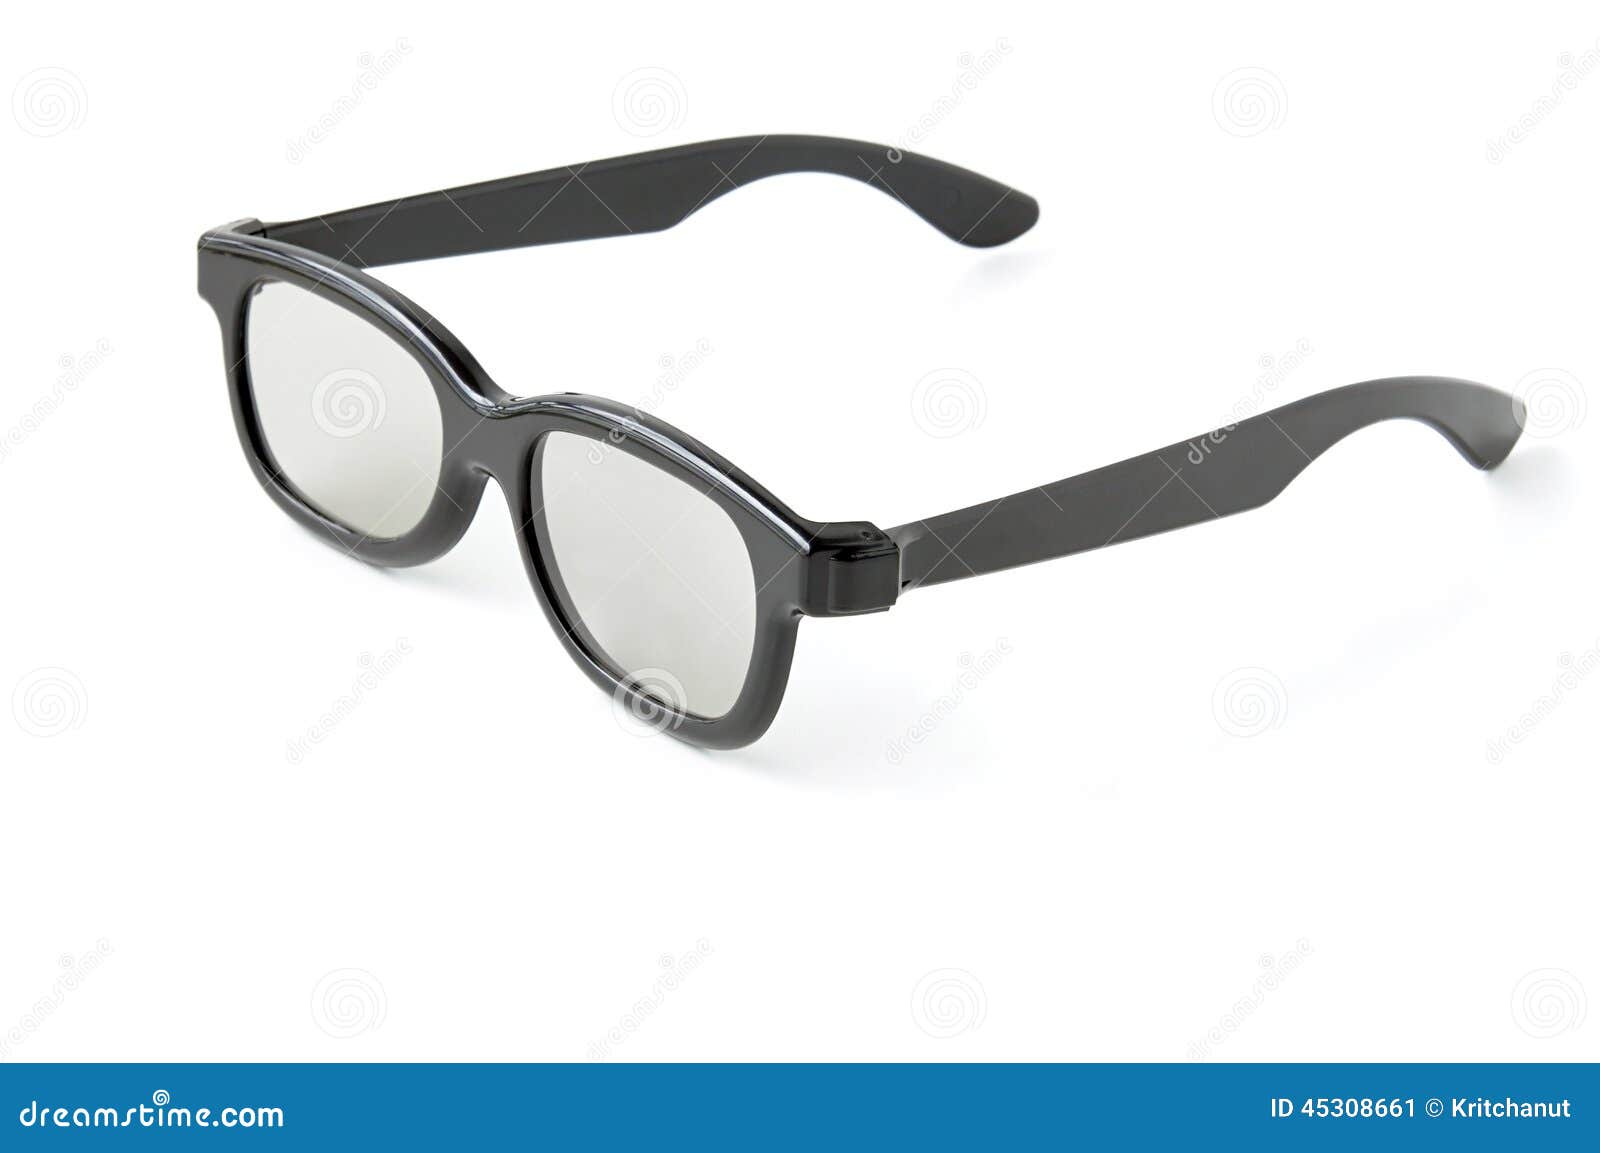 Eye Glasses (3D Cinema Glasses) Stock Image - Image of spectacles ...